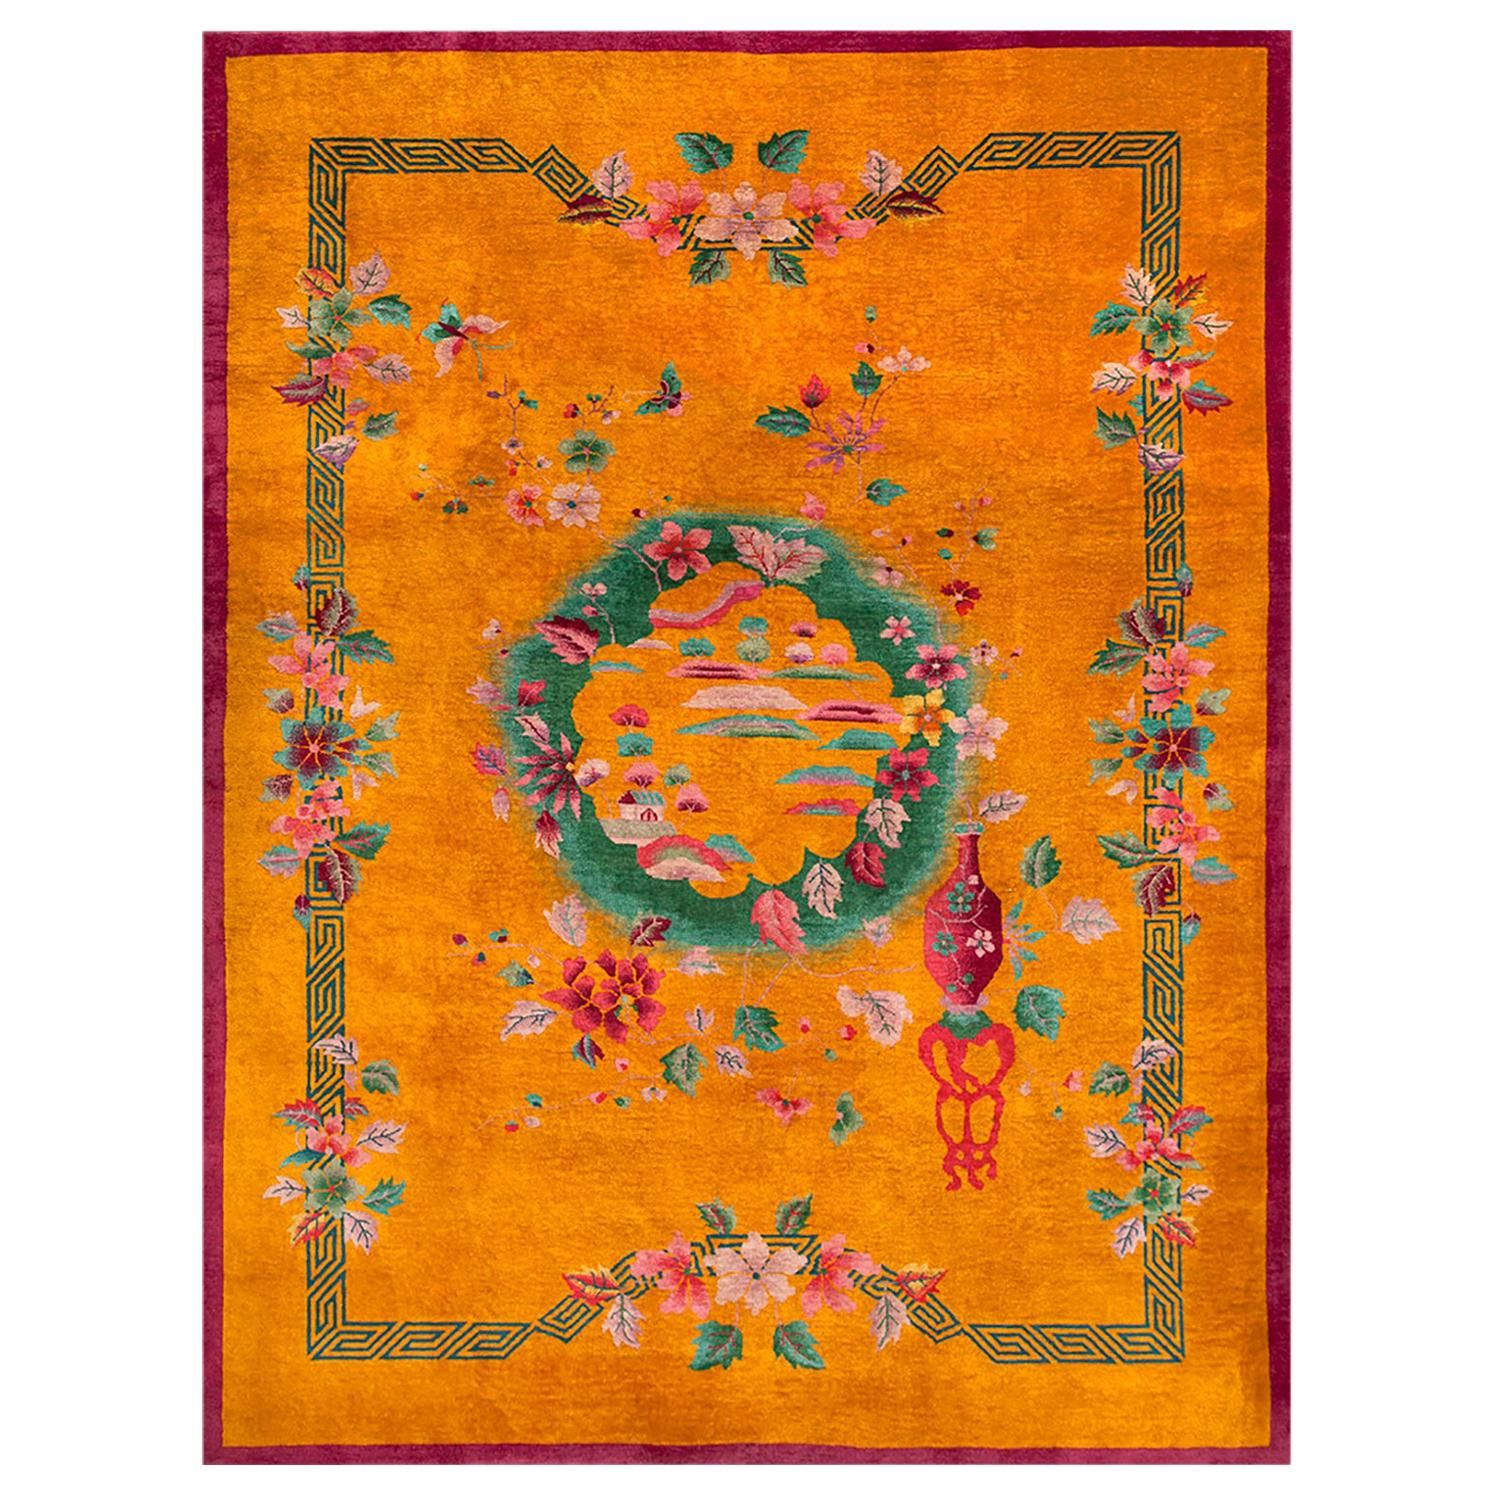 1920s Chinese Art Deco Carpet ( 9' x 11'8" - 274 - 356 )